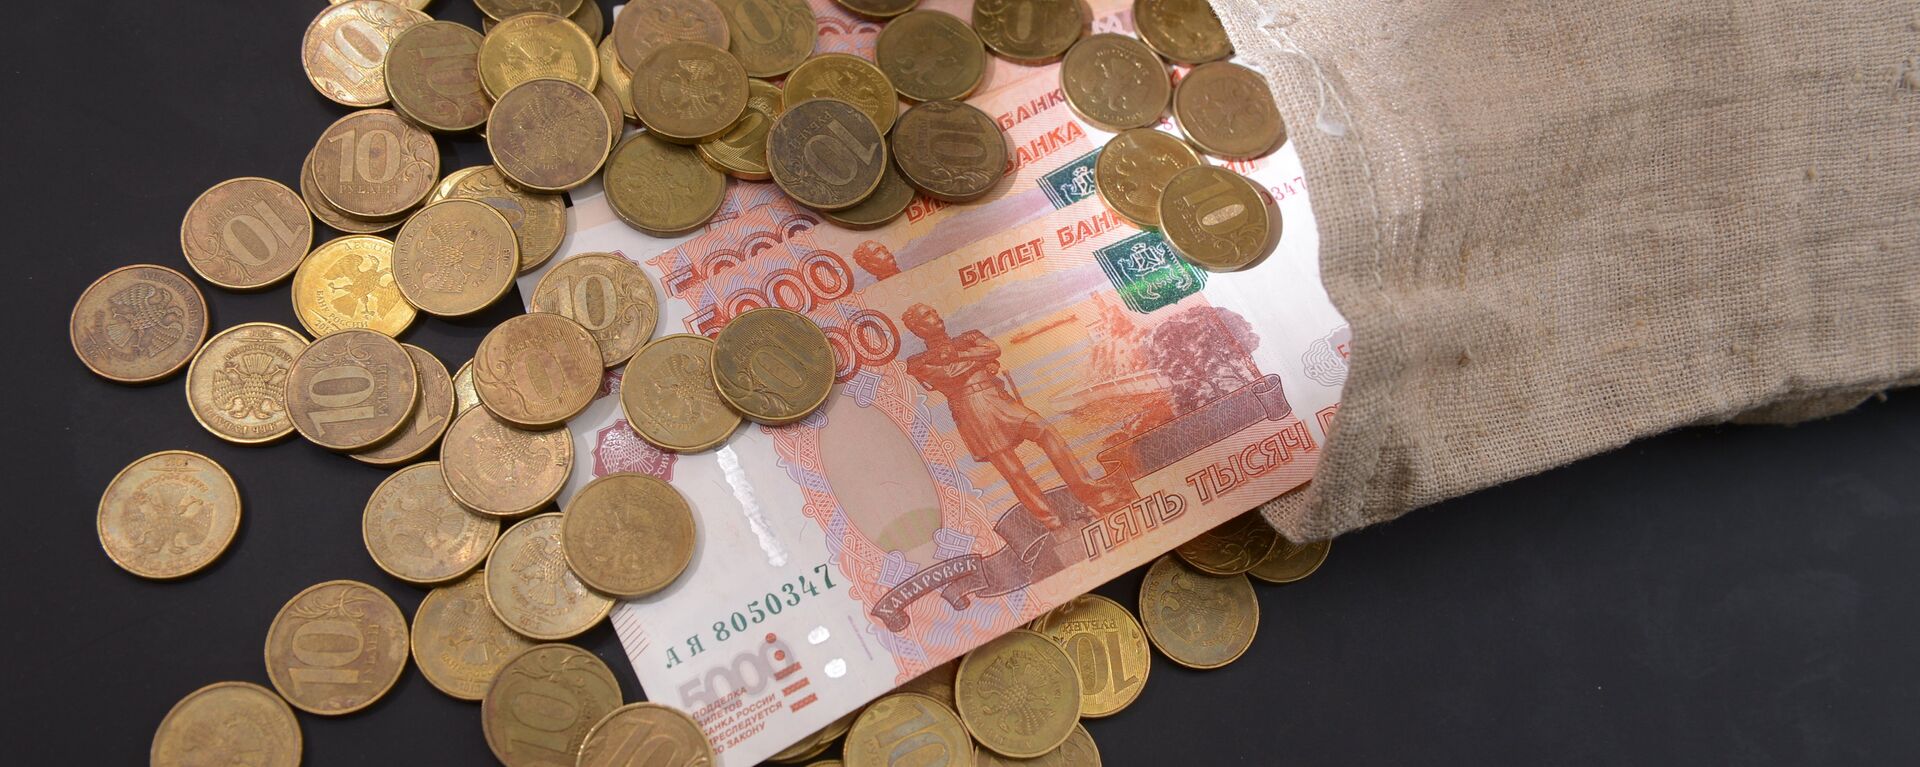 Monedas y billetes del rublo ruso - Sputnik Mundo, 1920, 12.05.2022